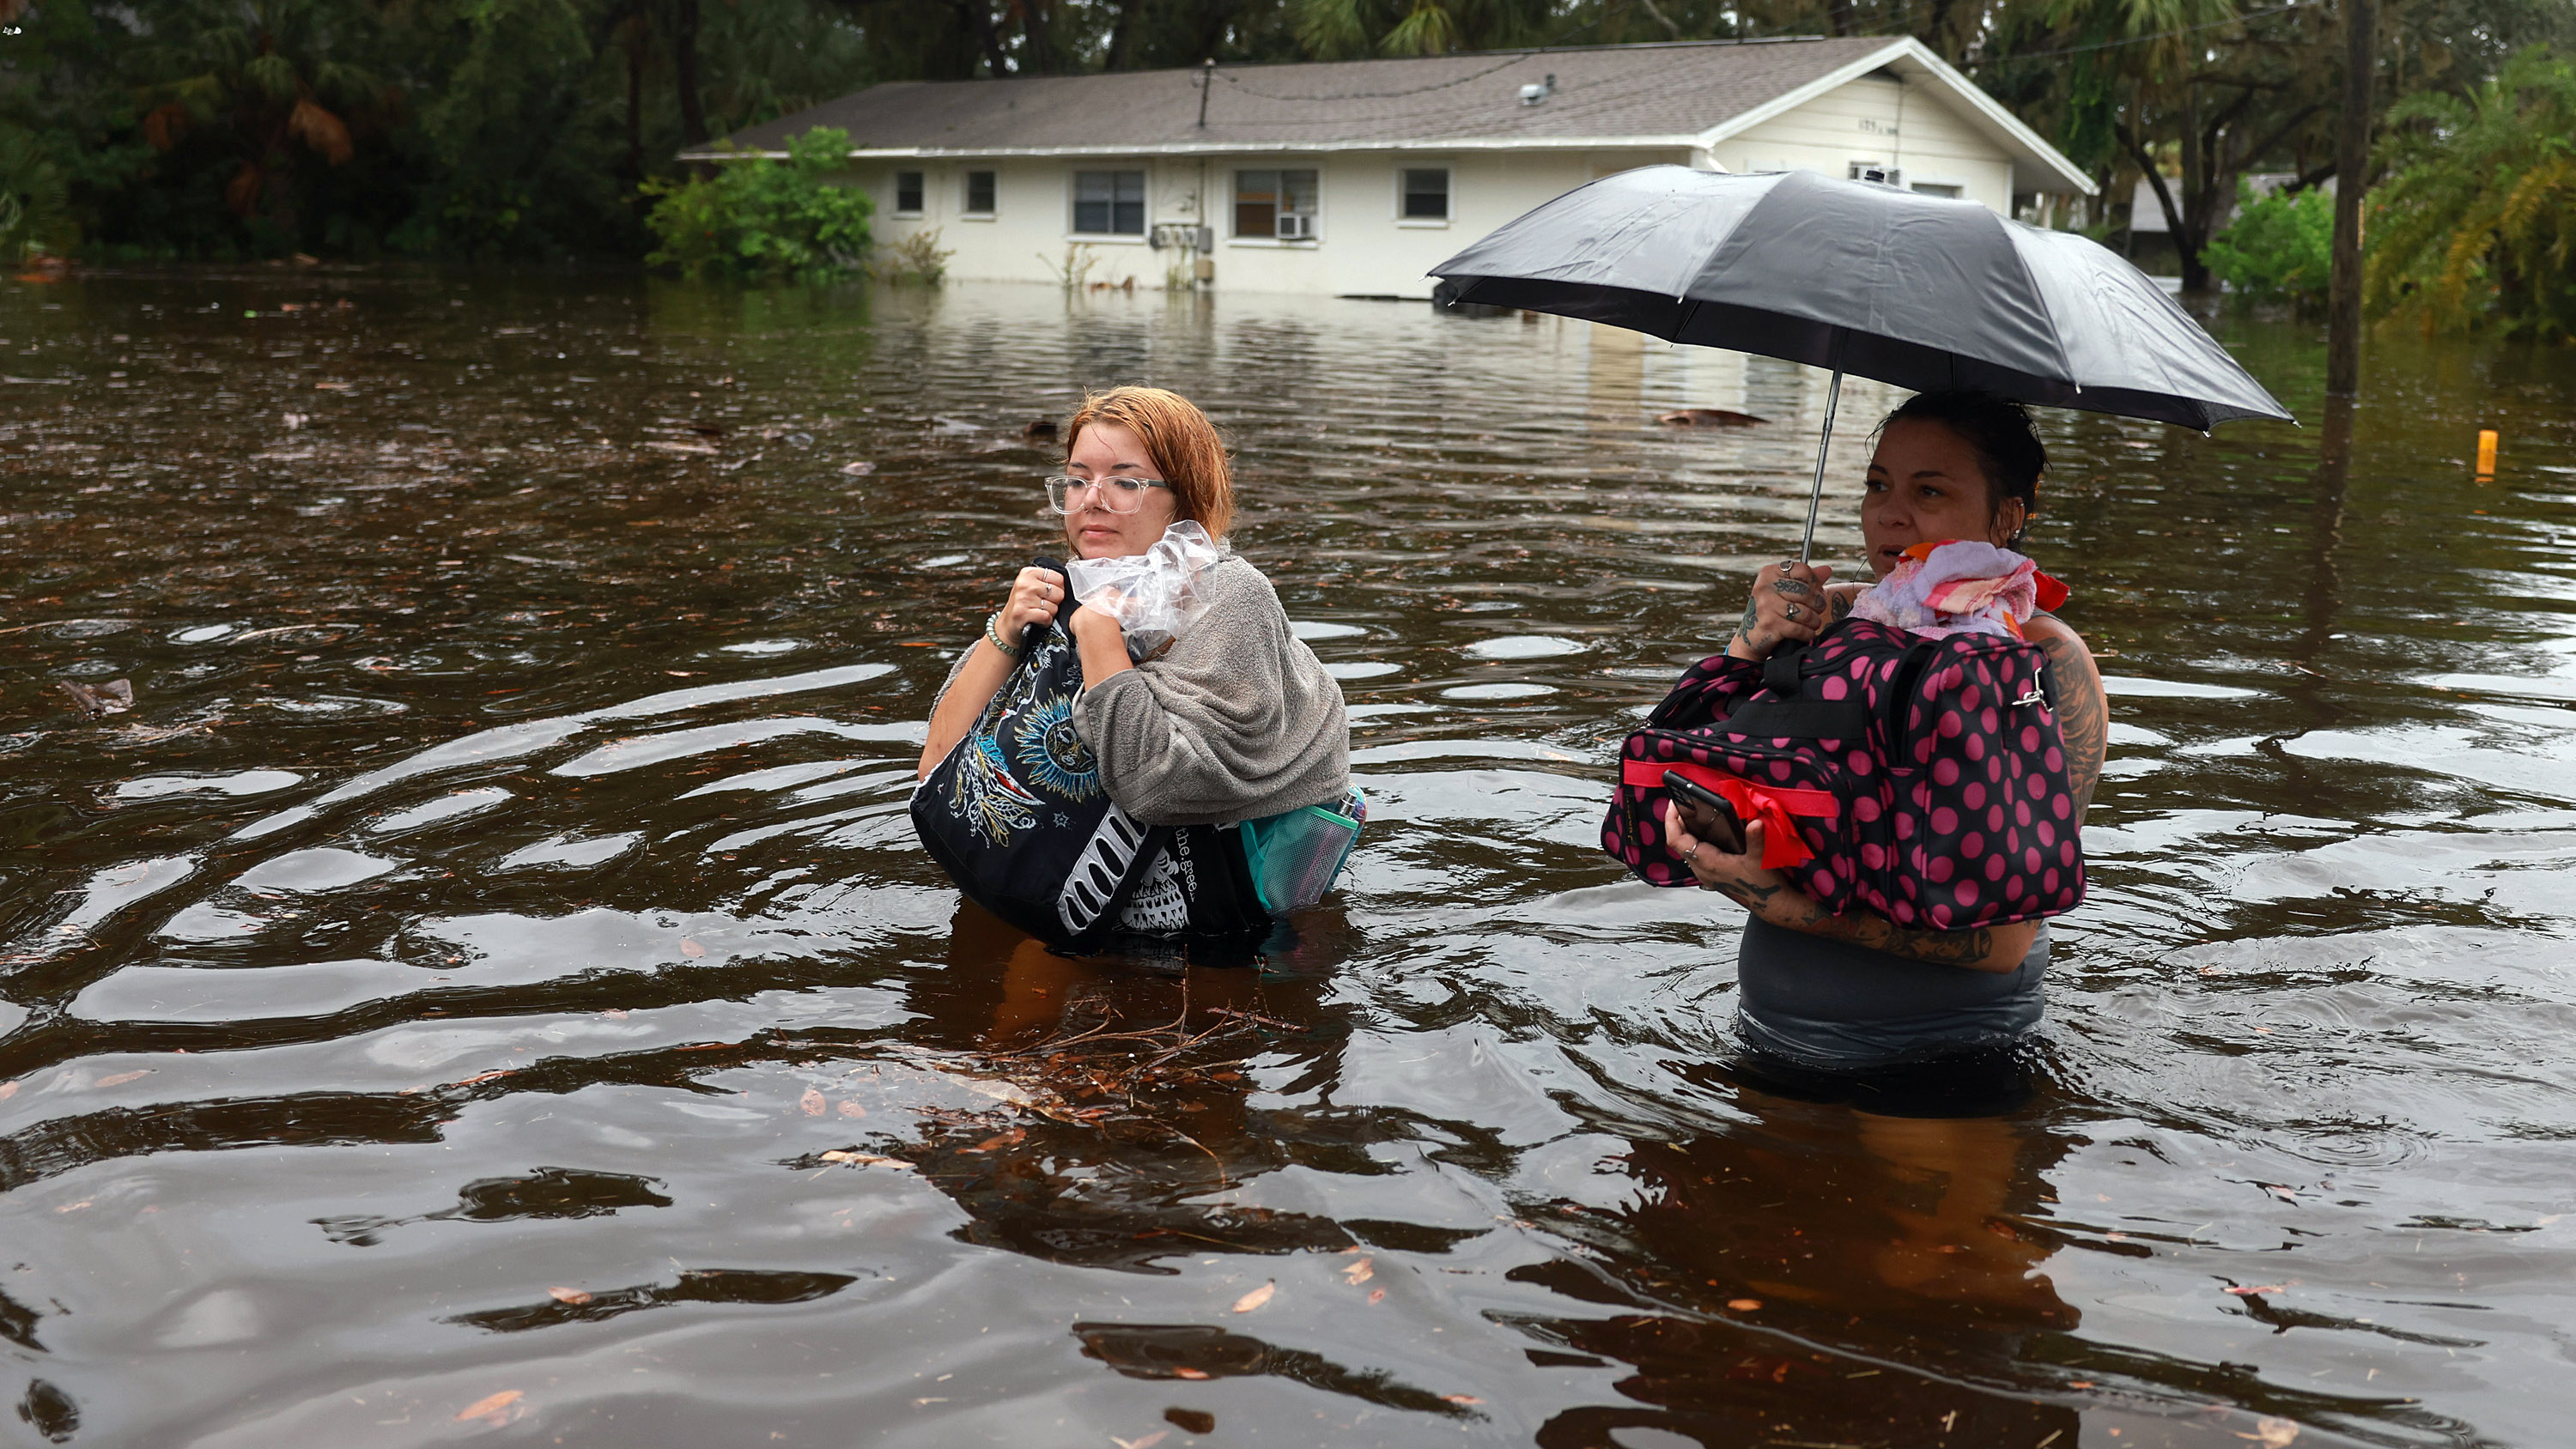 Two women wade through waist-high water holding up their belongings.